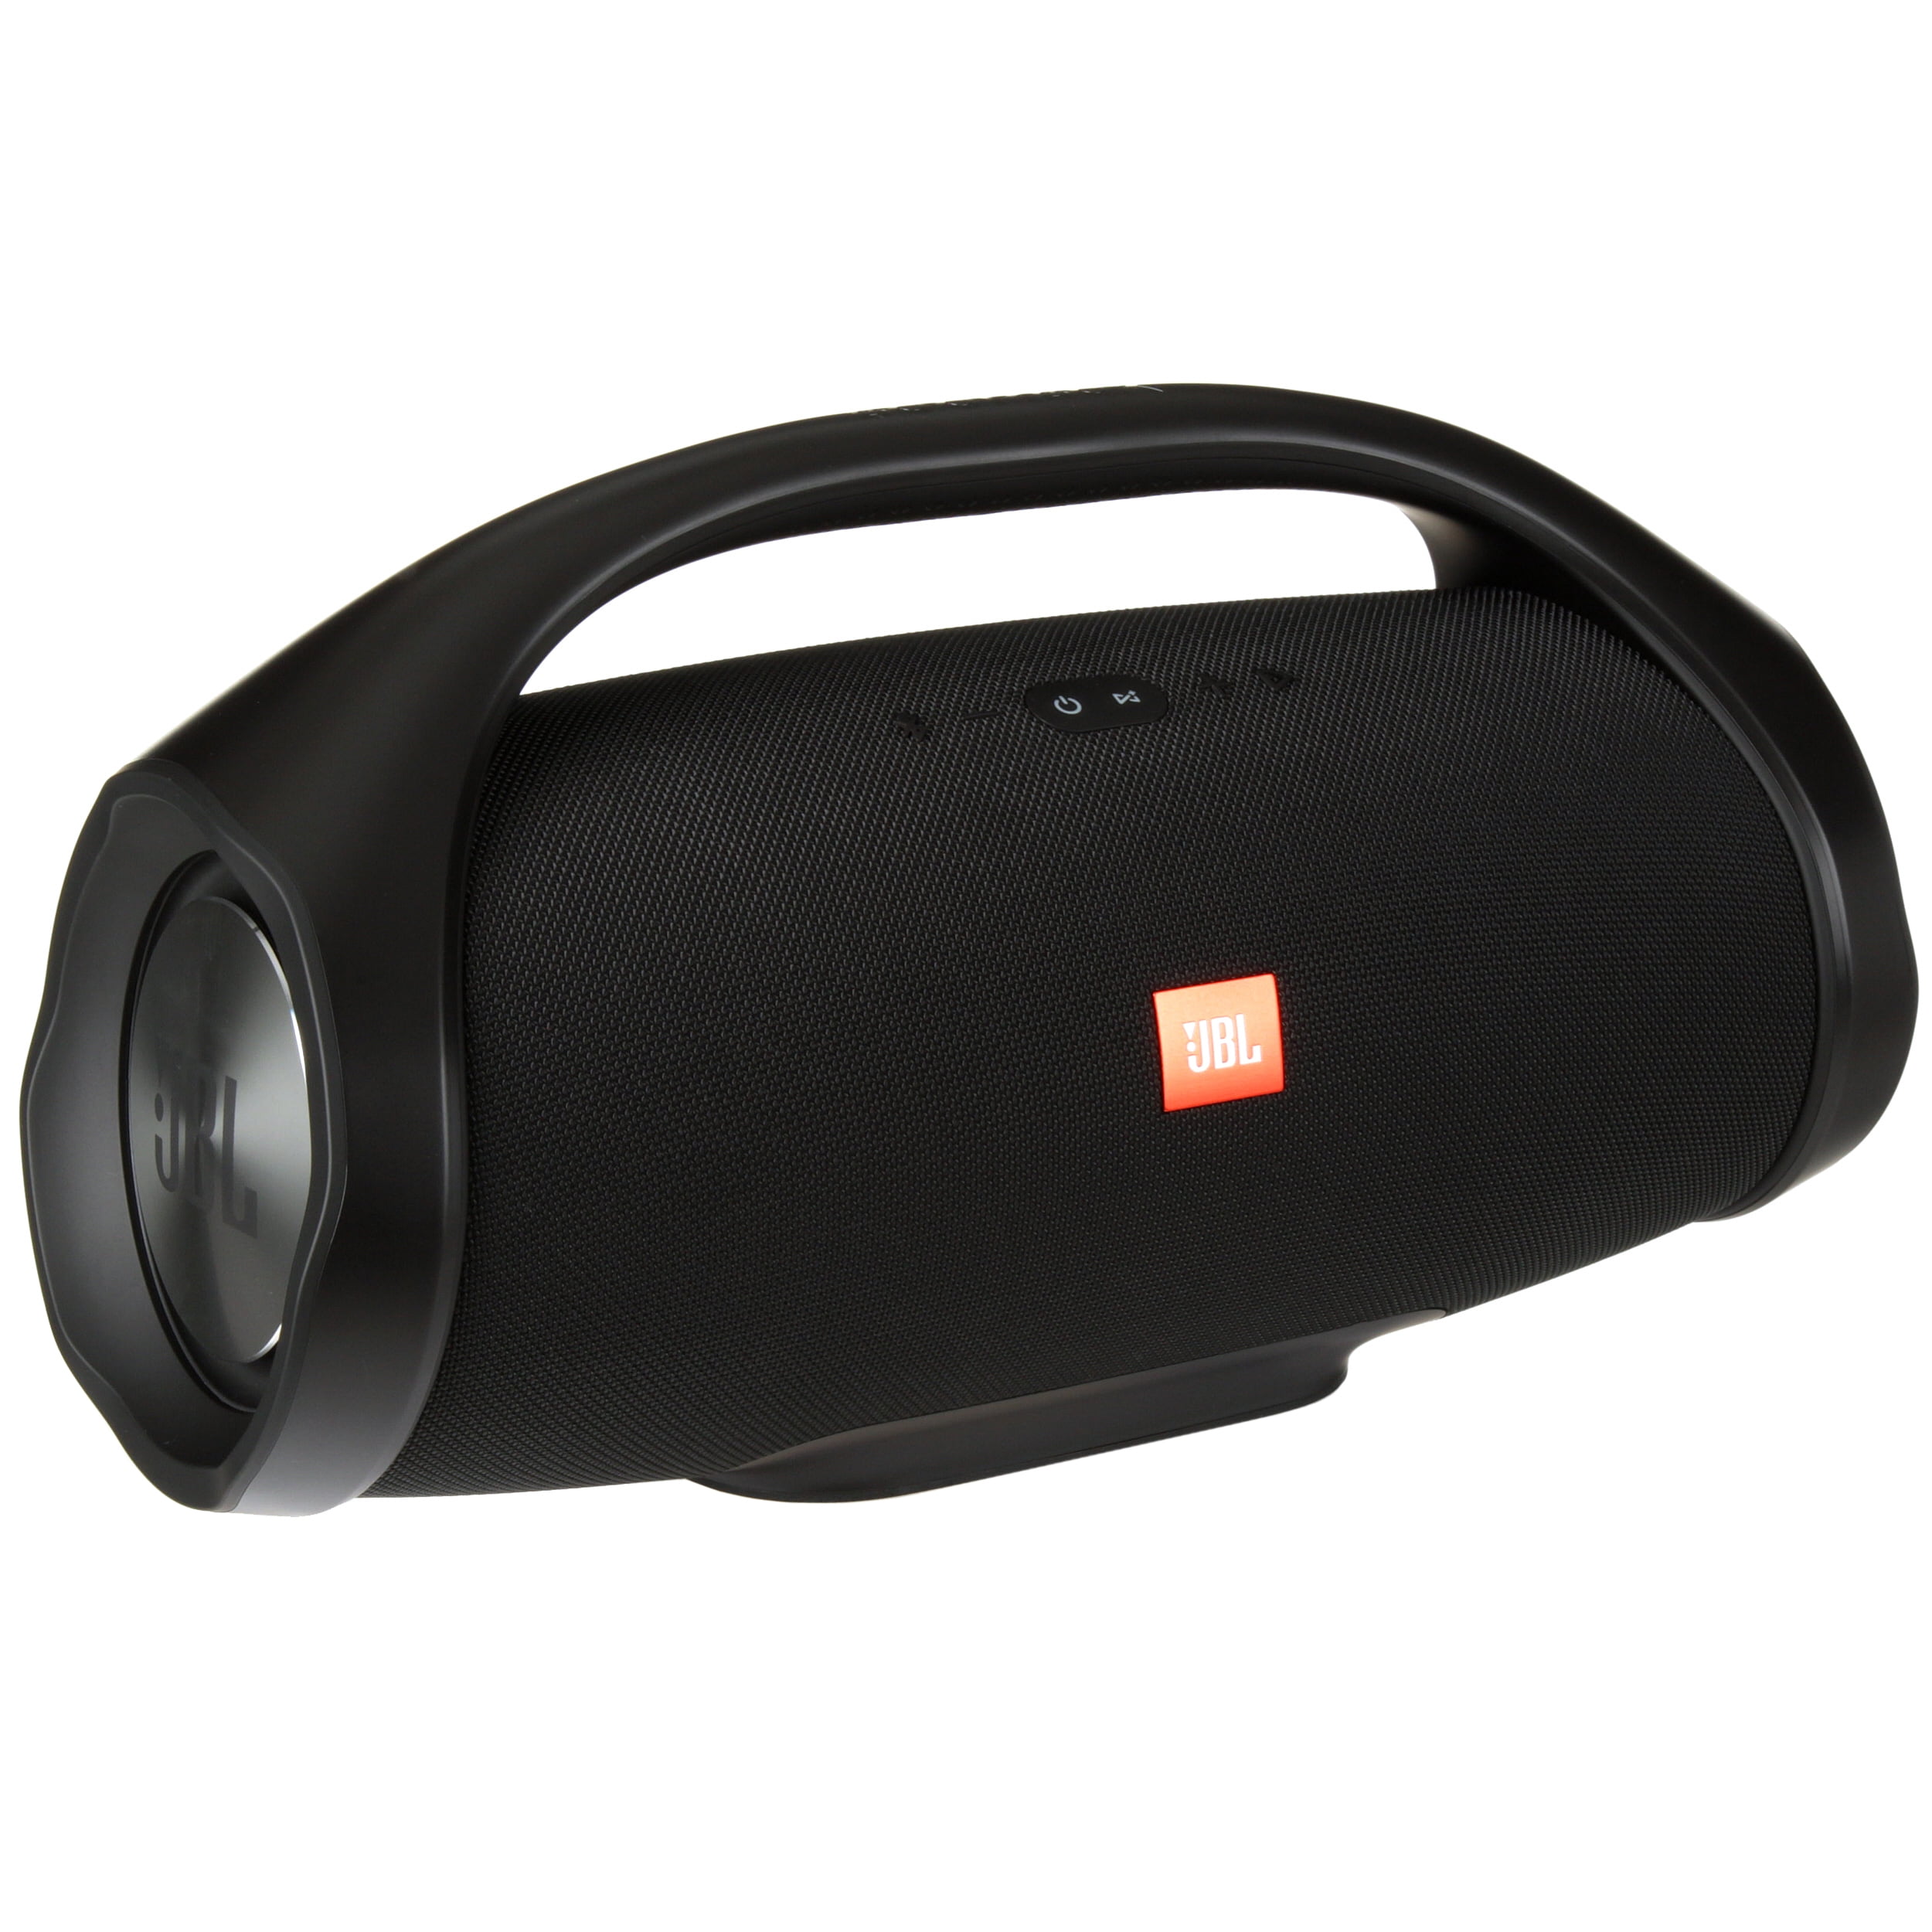 JBL Portable Waterproof Speaker, Black Walmart.com